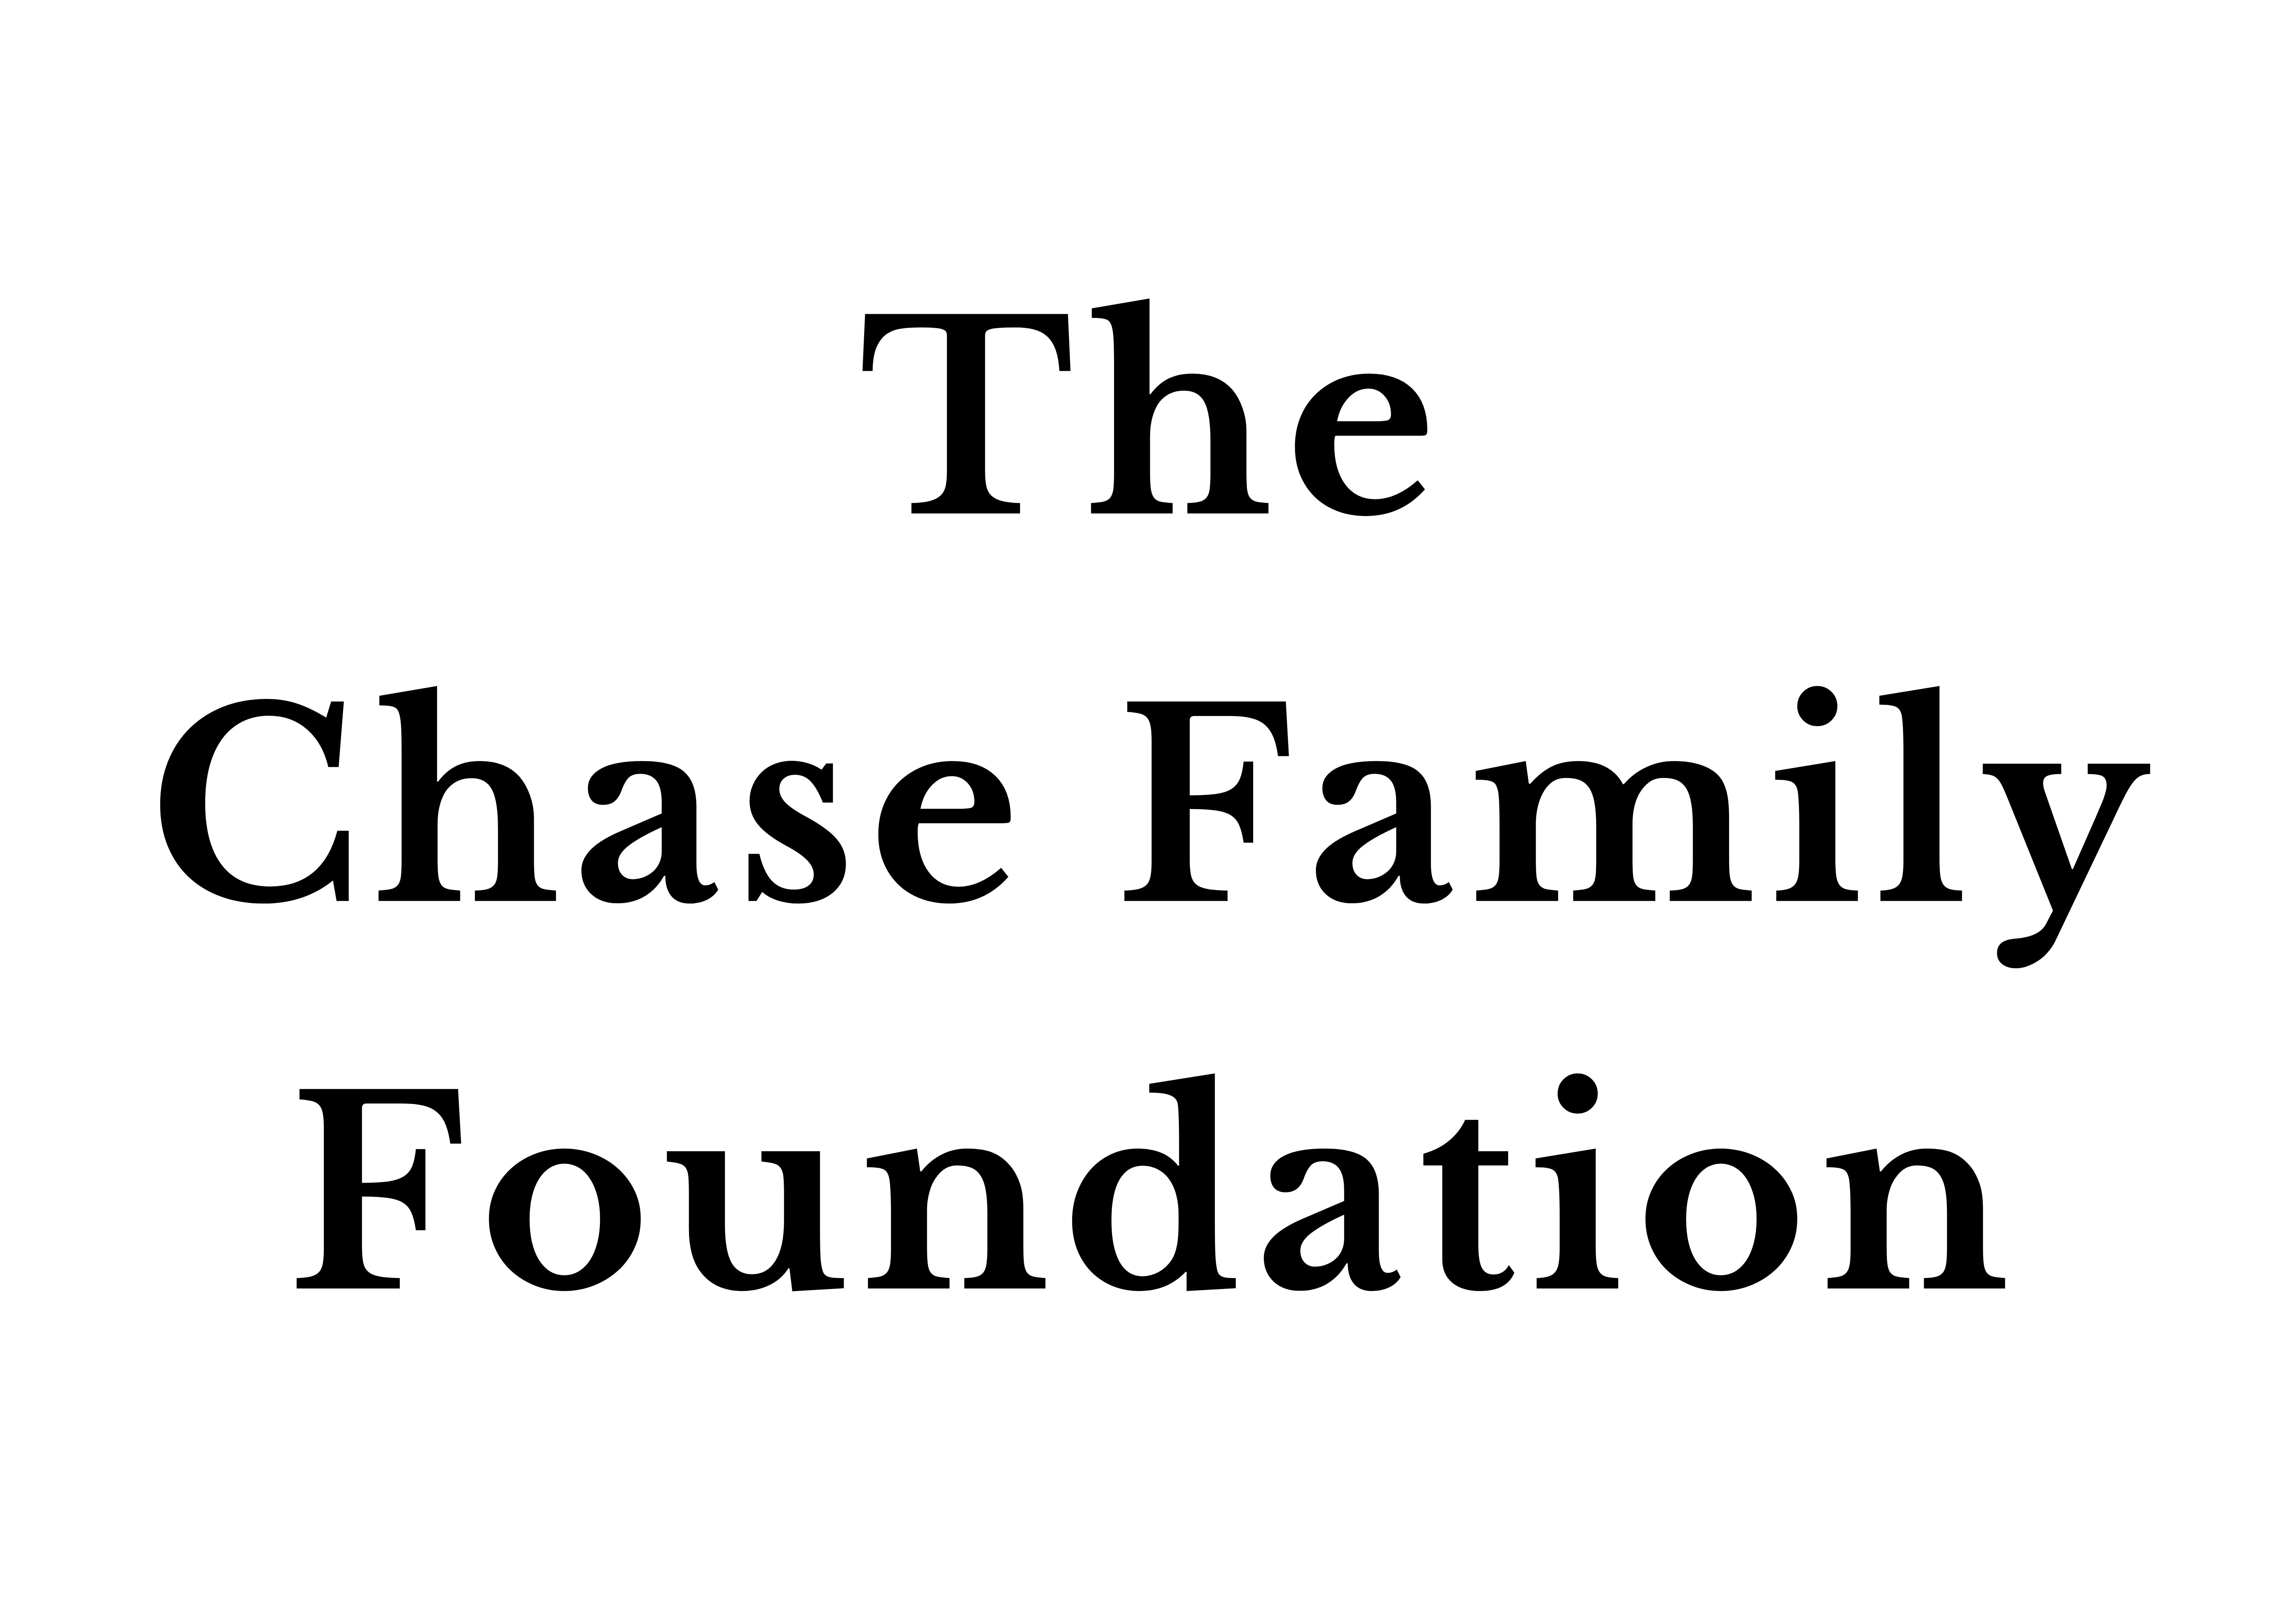 Chase Family Foundation